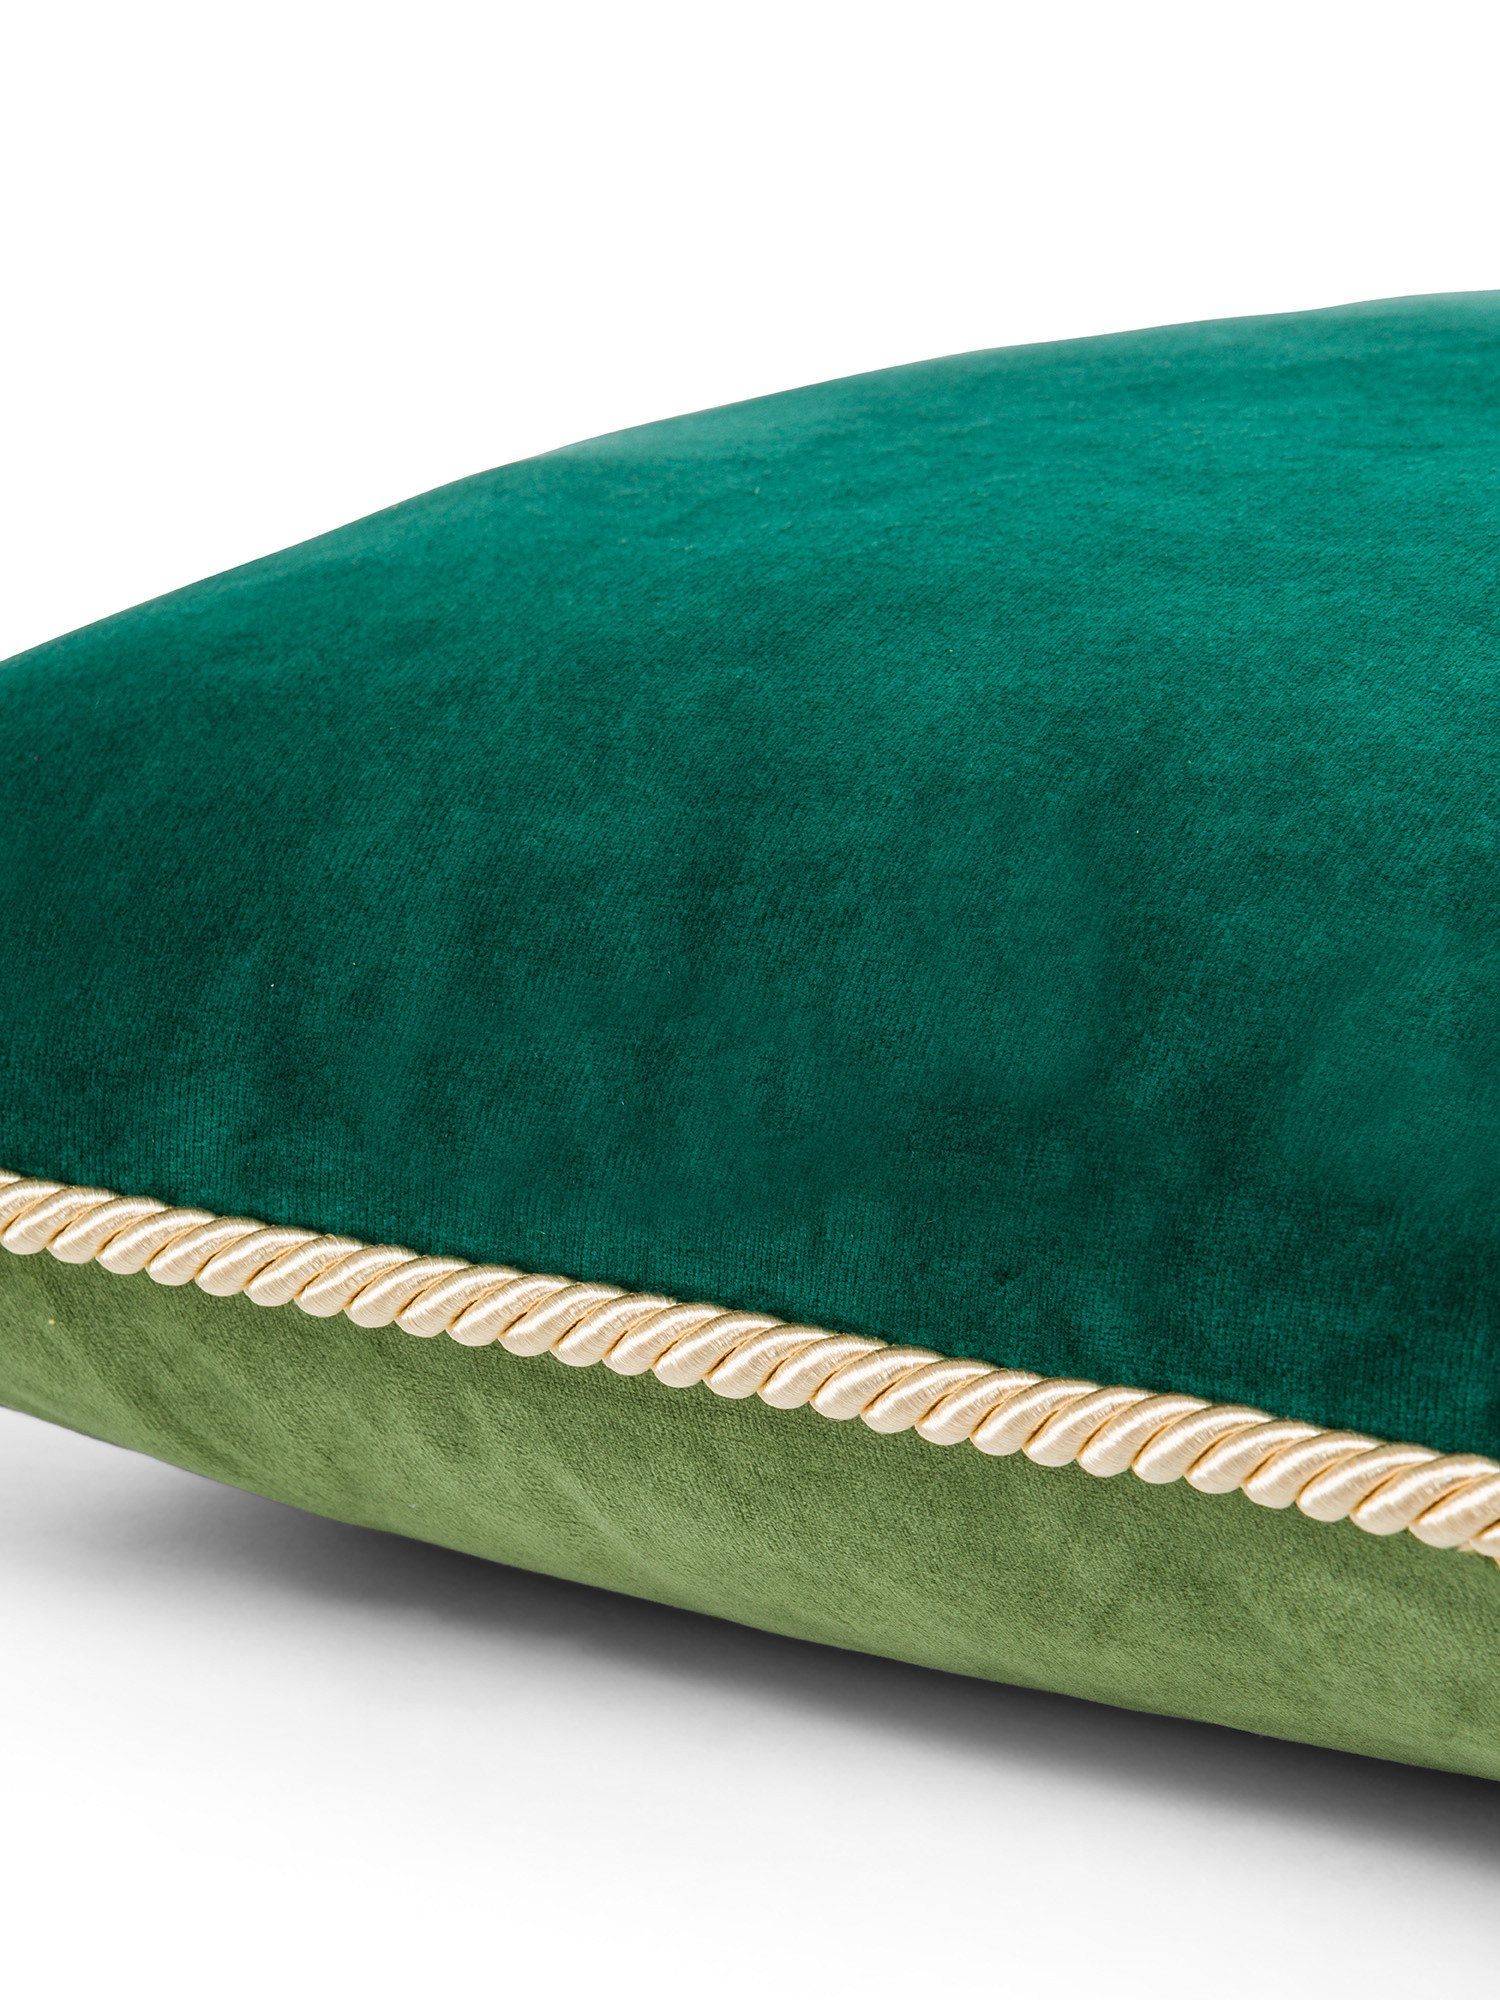 Two-tone velvet cushion 45X45cm, Green, large image number 2